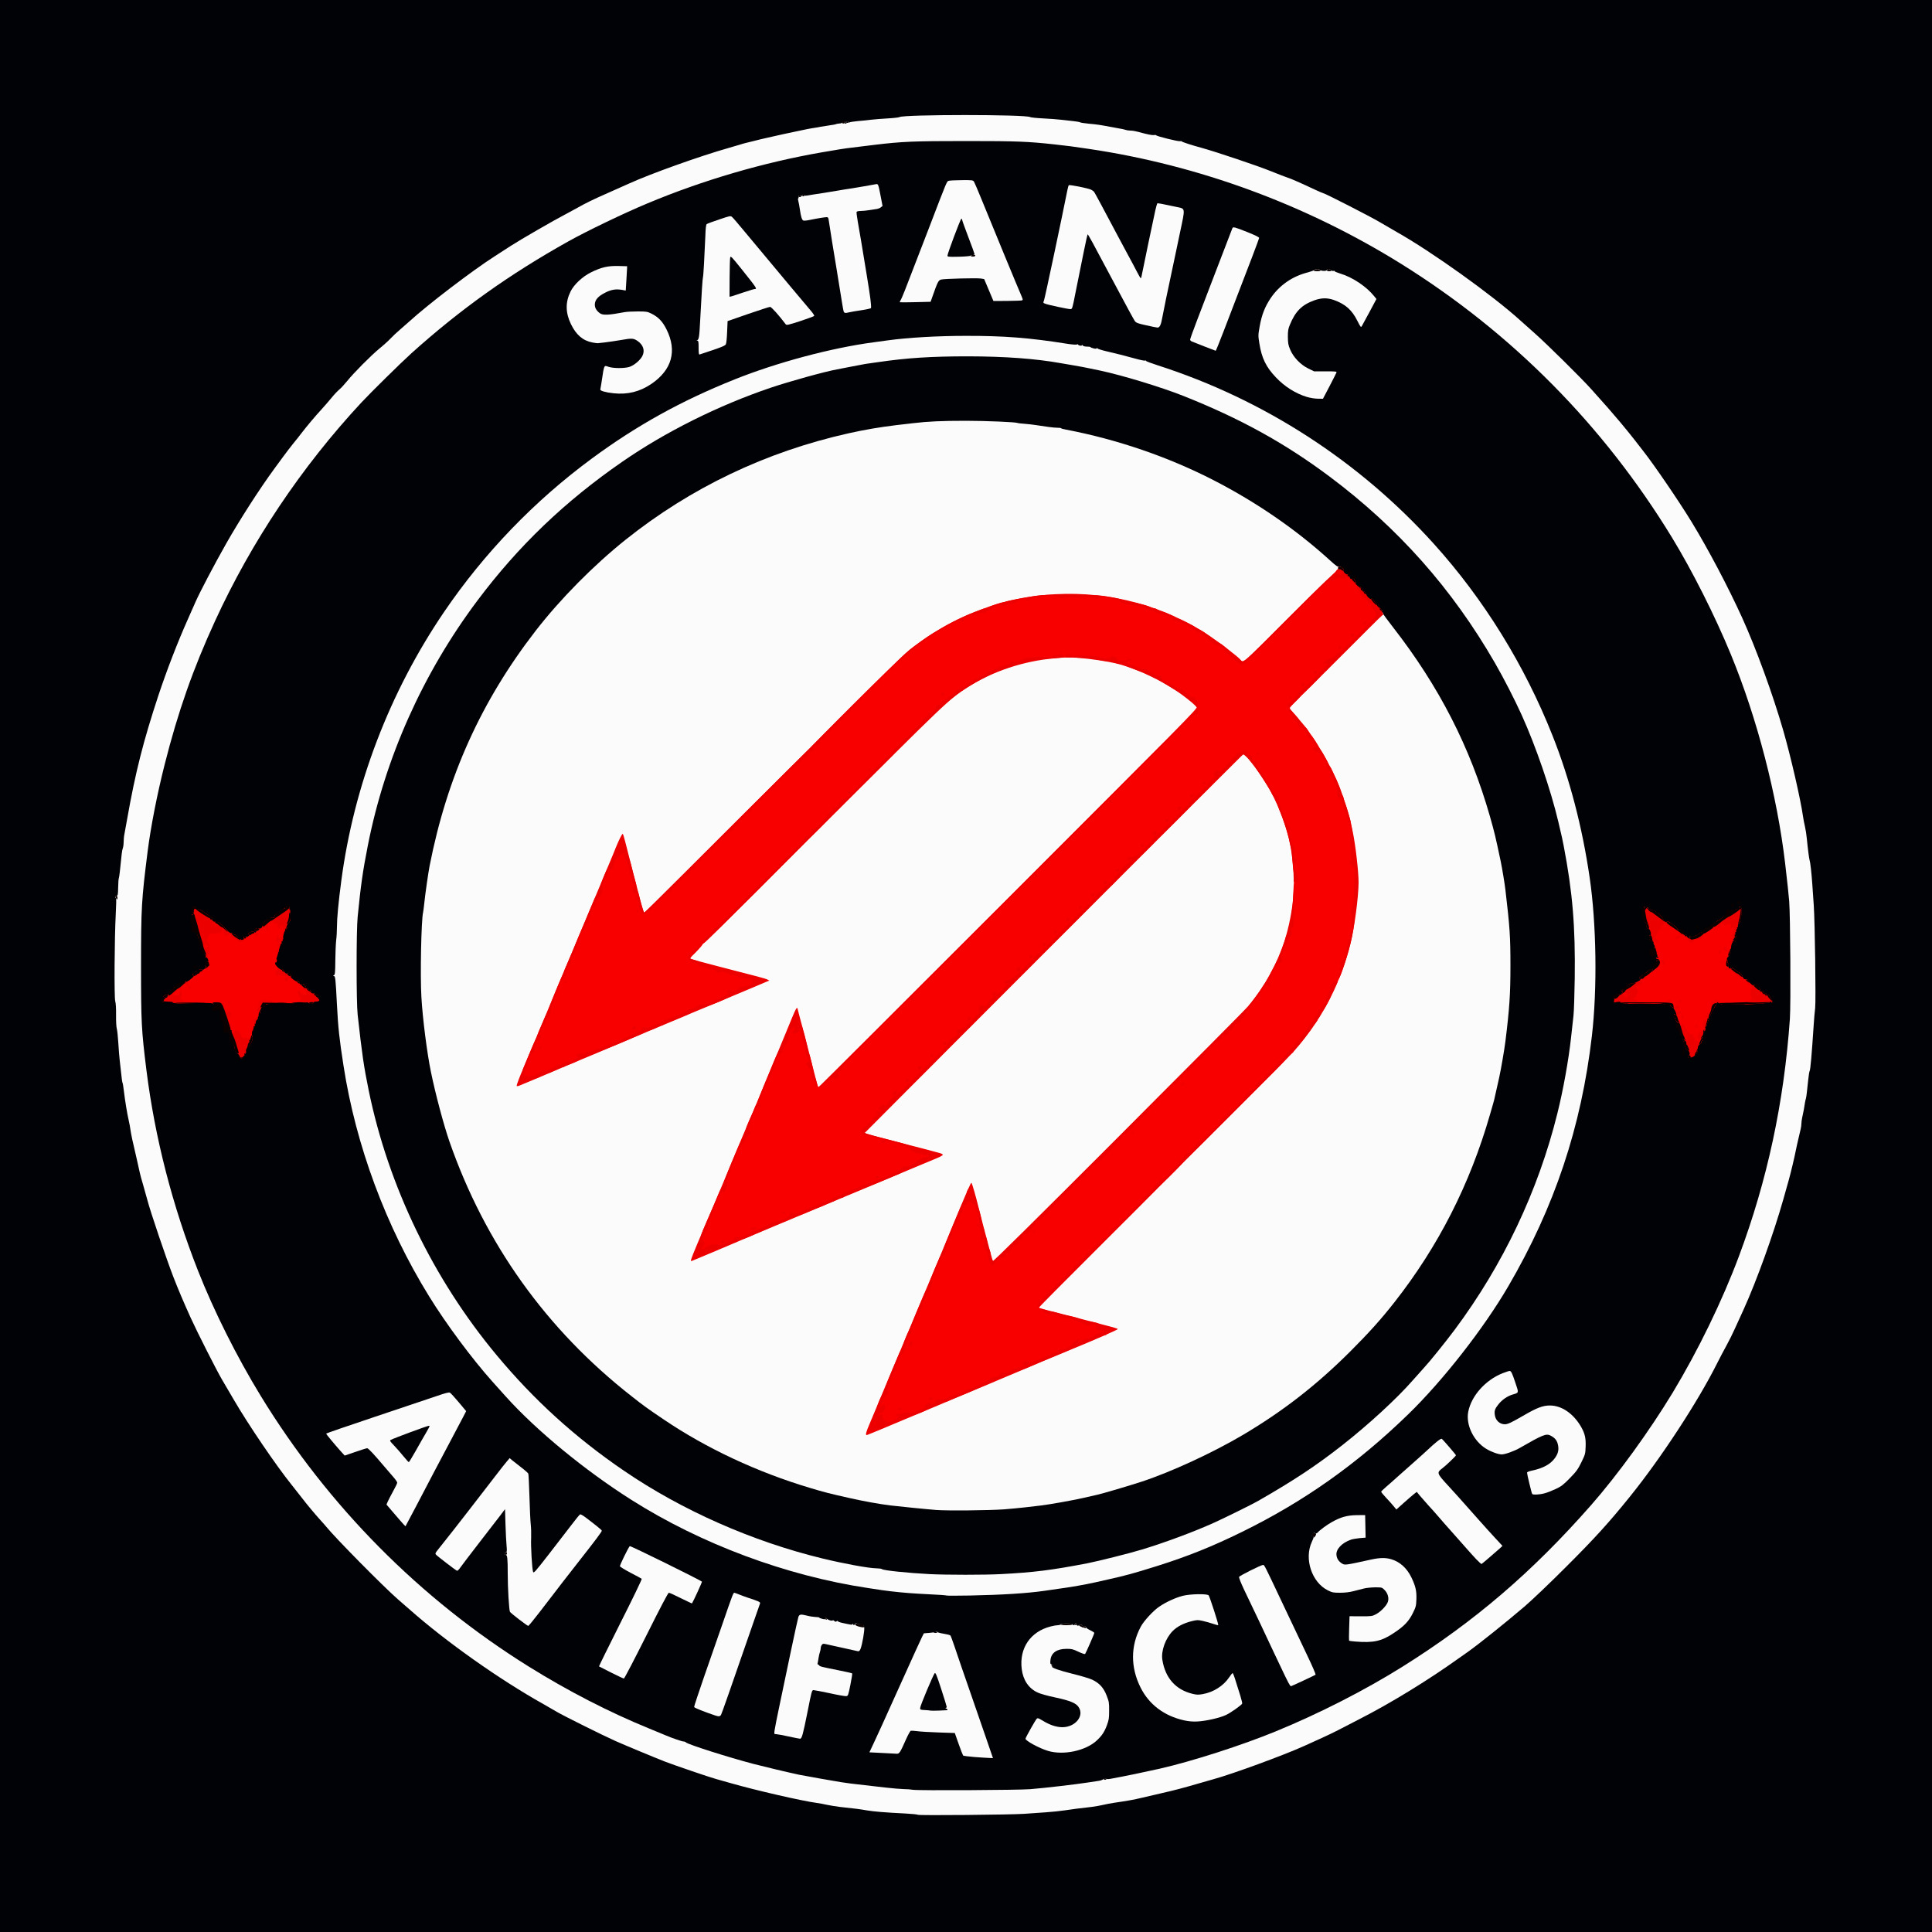 Satanic antifascists